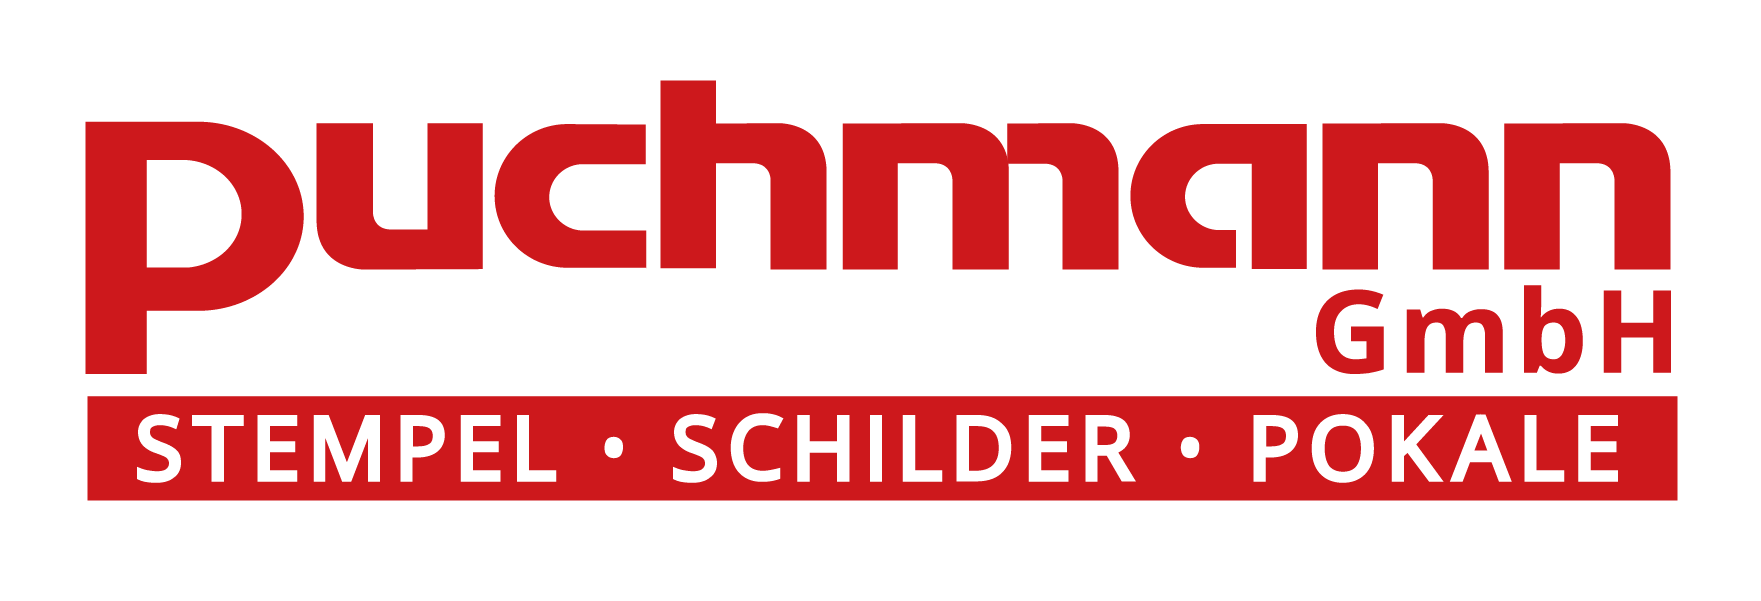 Puchmann Logo